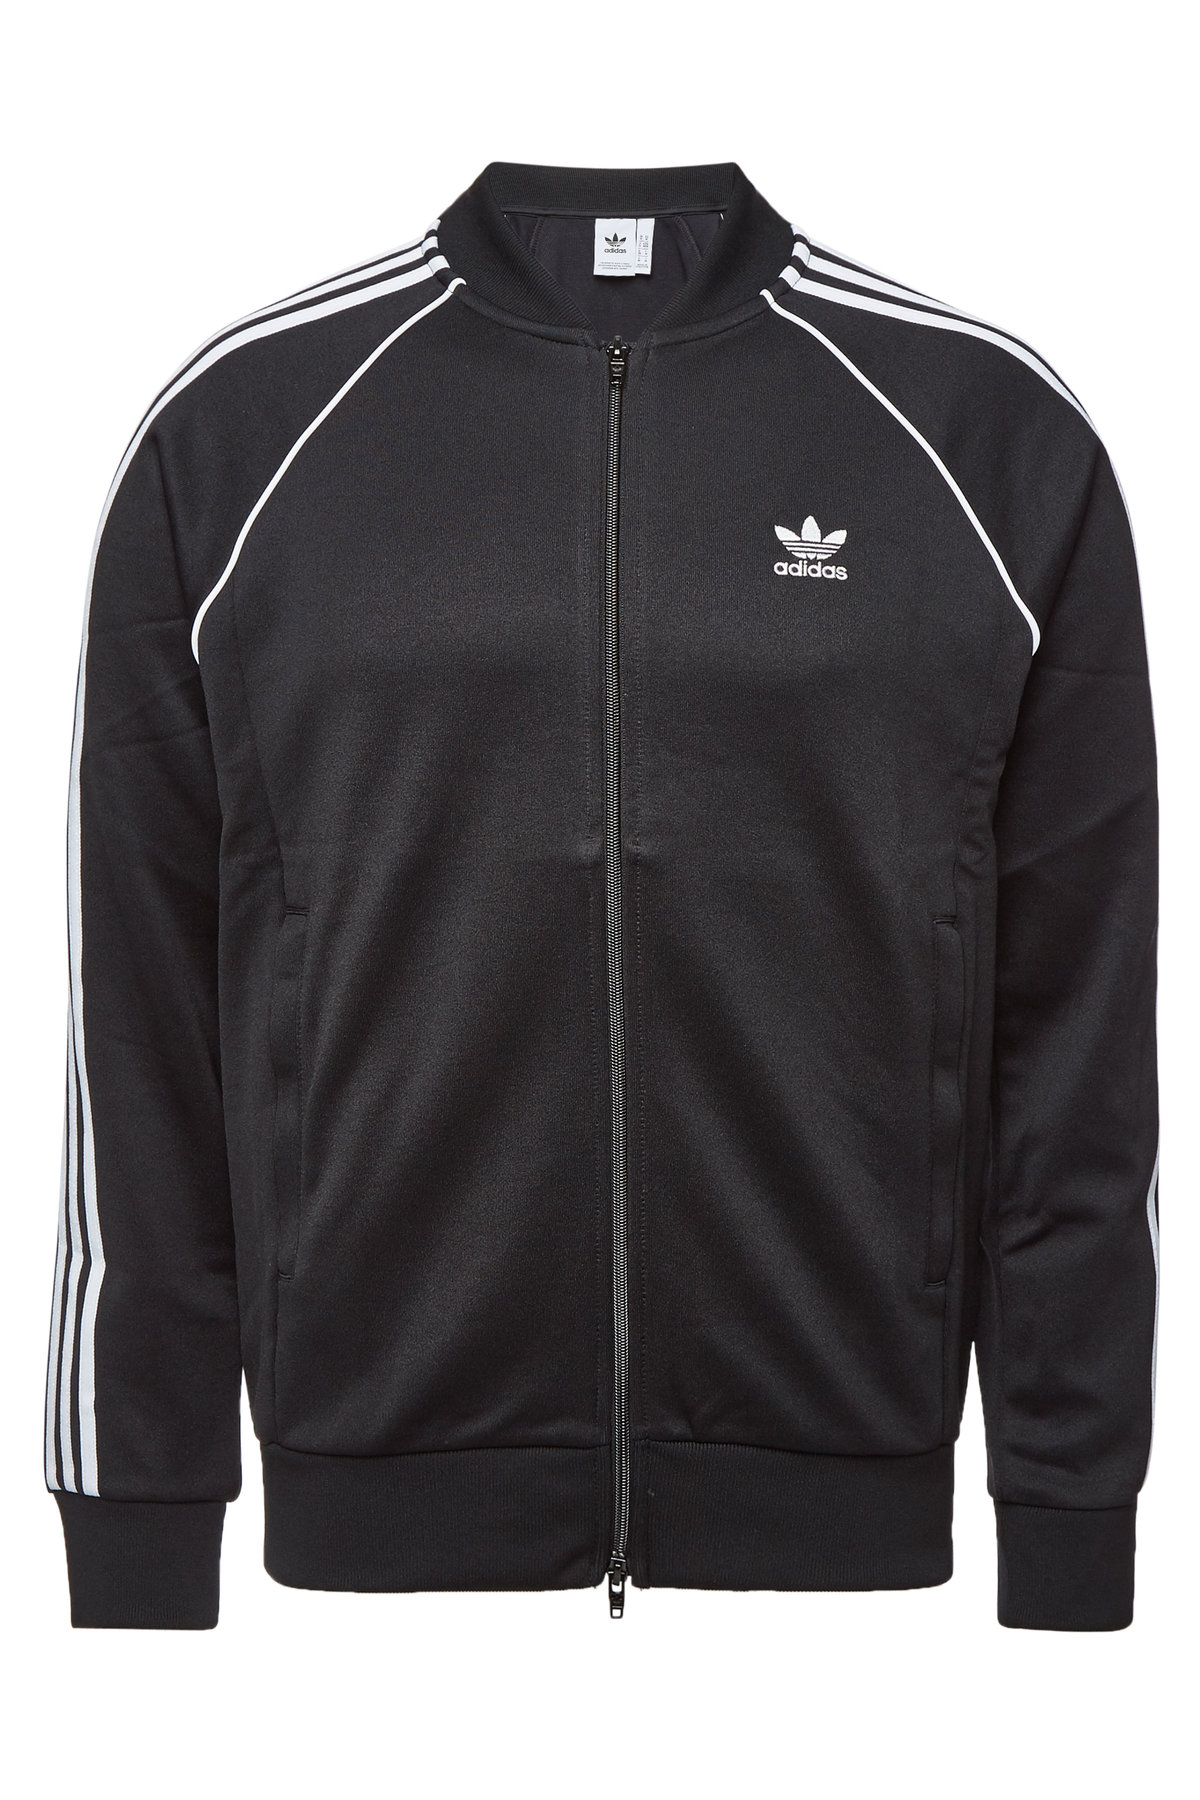 Adidas Originals Sst Track Jacket With 